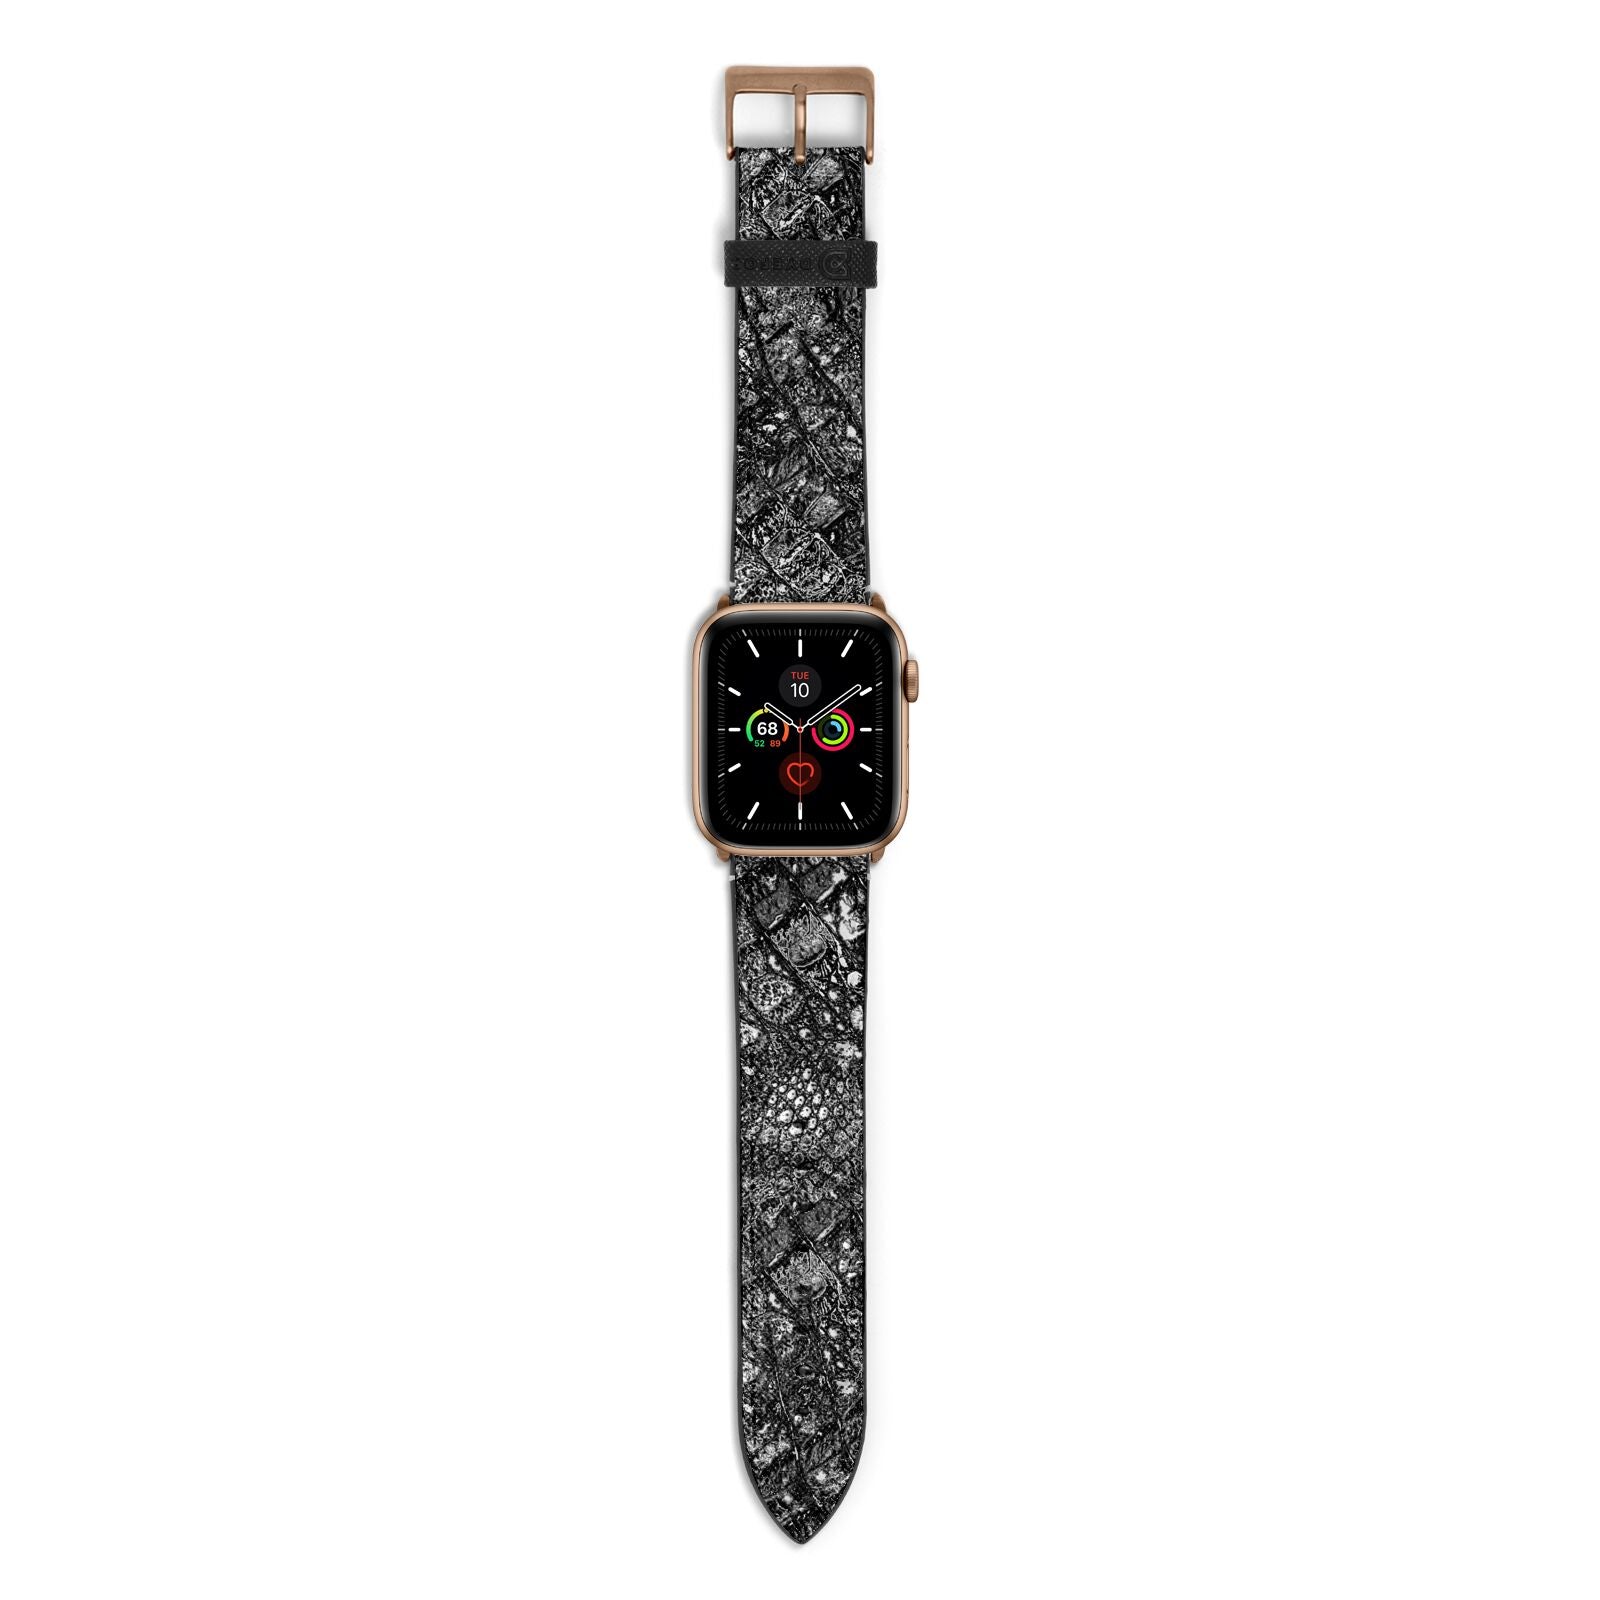 Snakeskin Design Apple Watch Strap with Gold Hardware